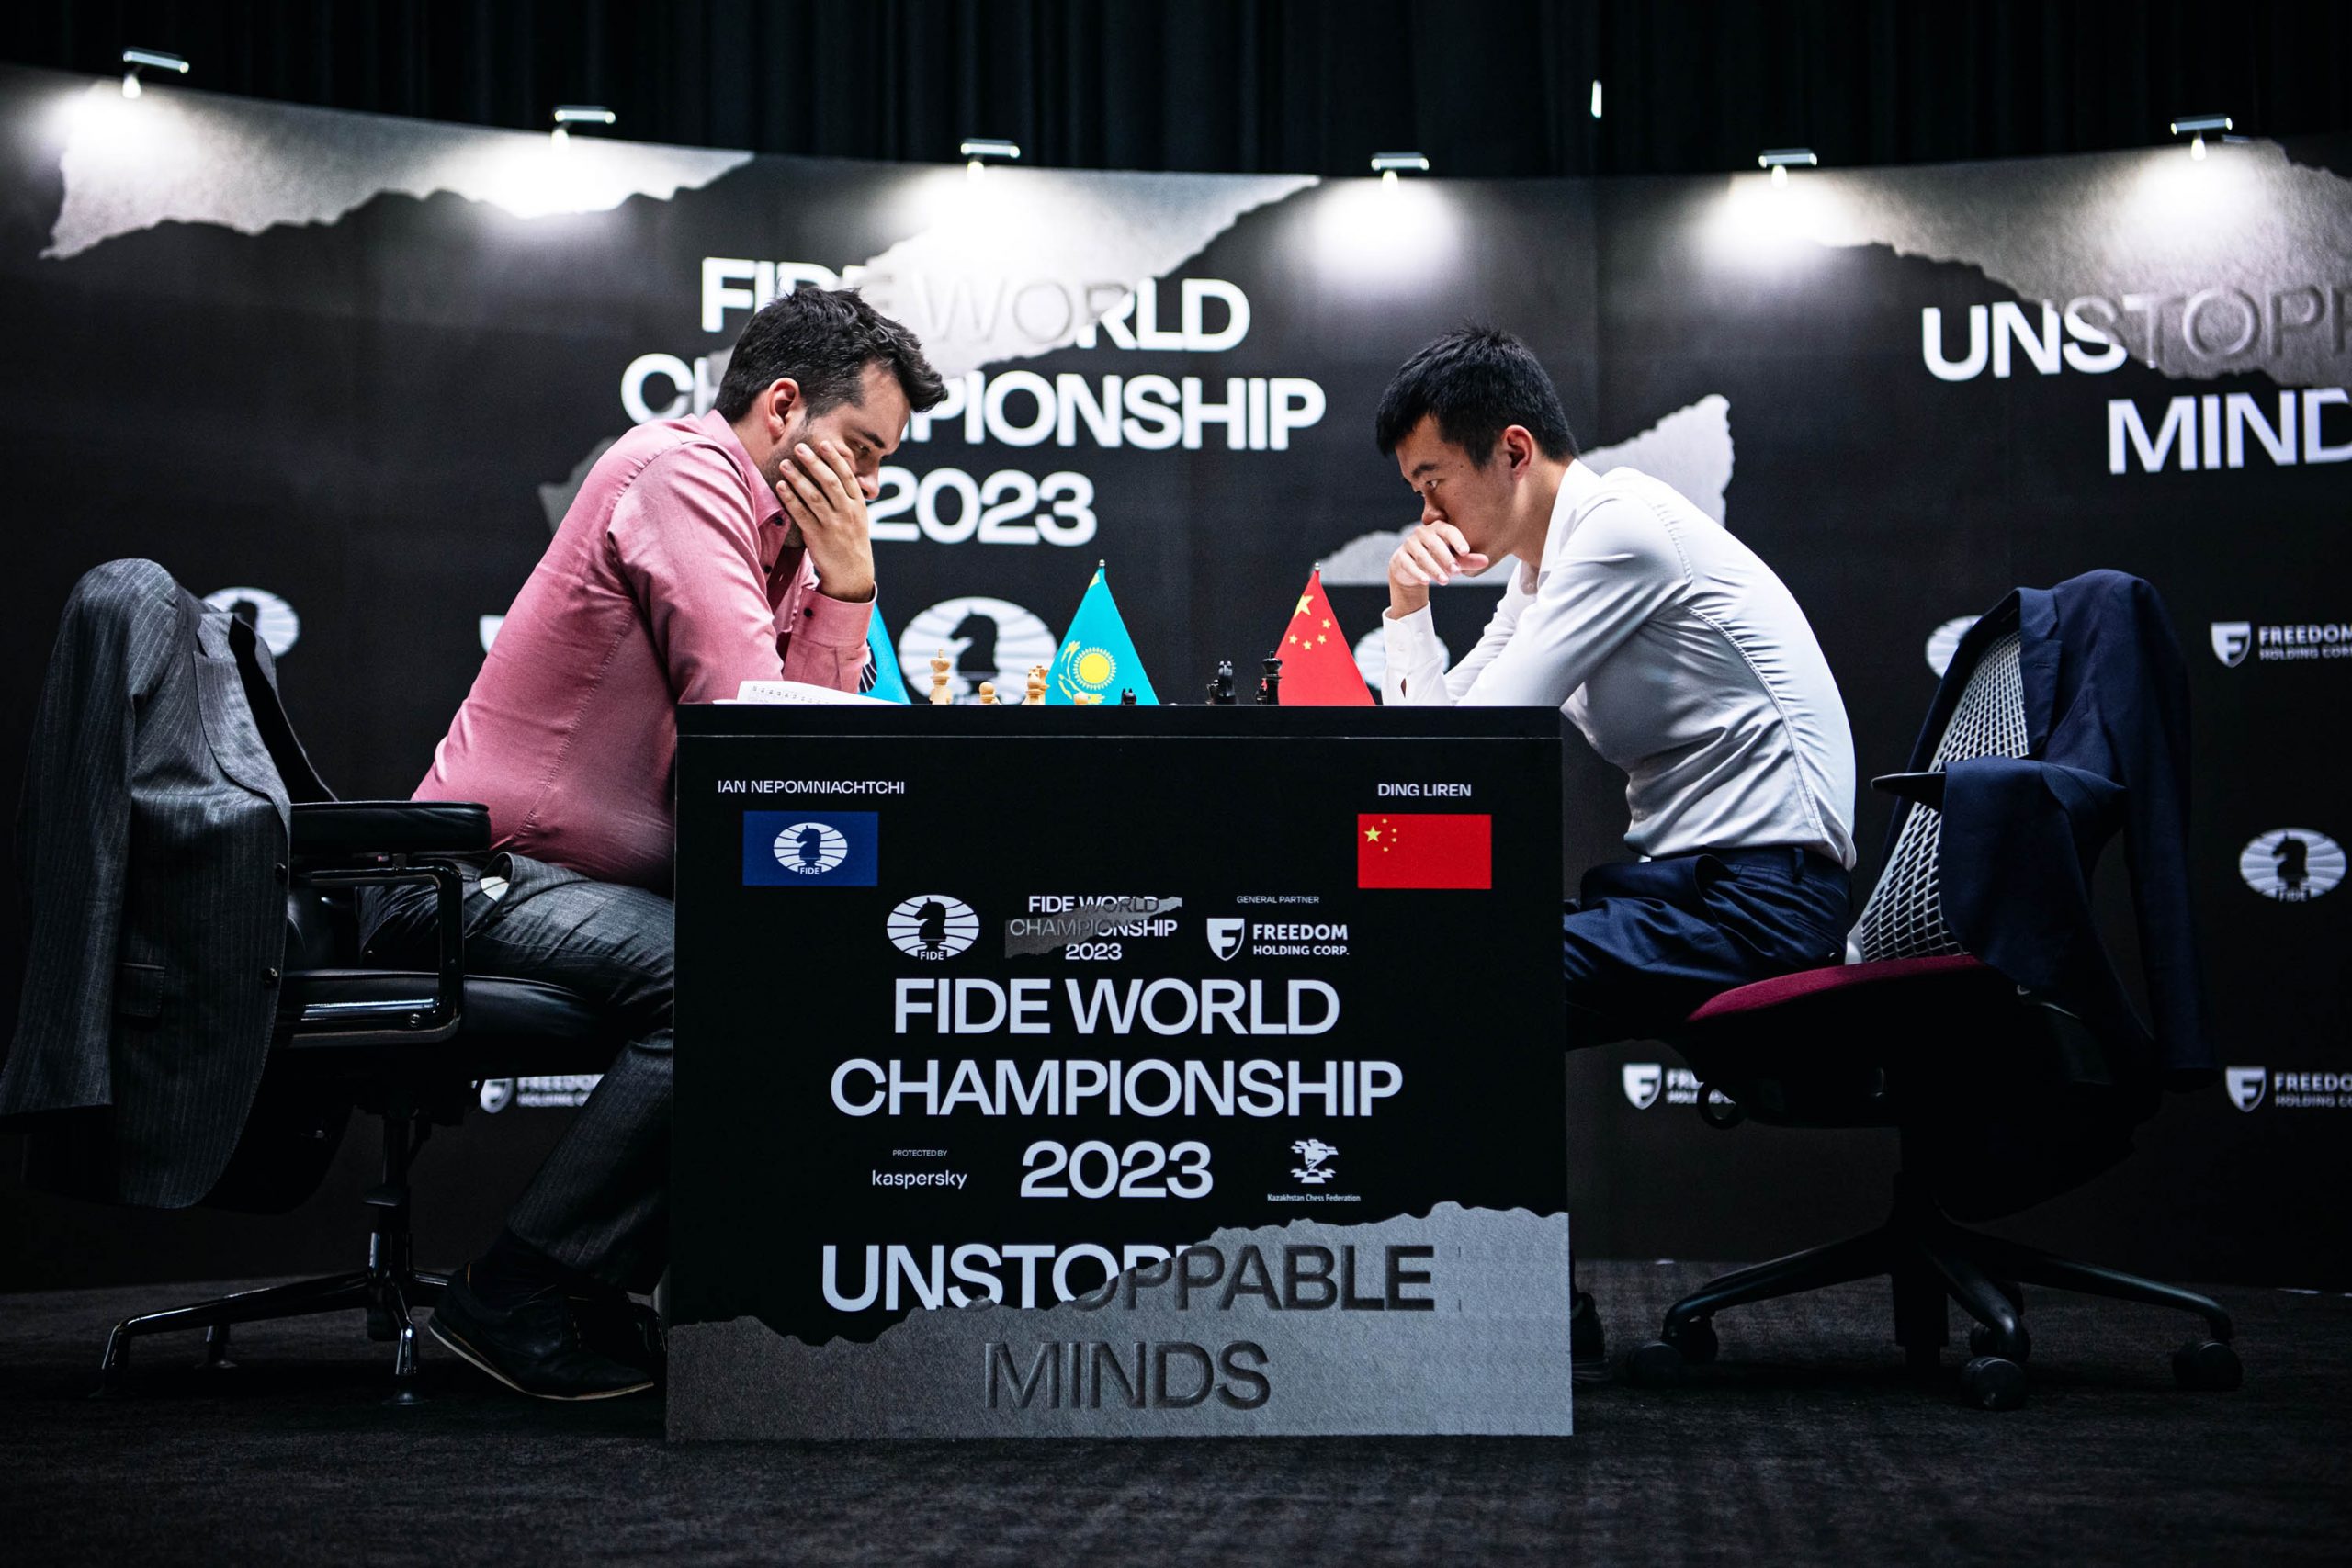 Ding vs Nepomniachtchi, FIDE World Championship